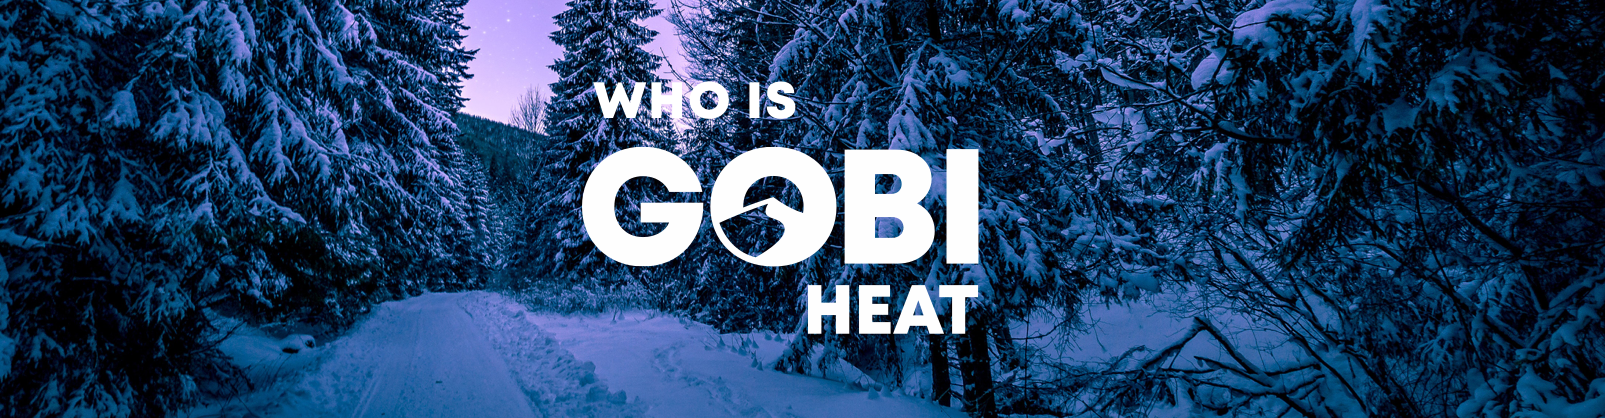 who is gobi heat banner